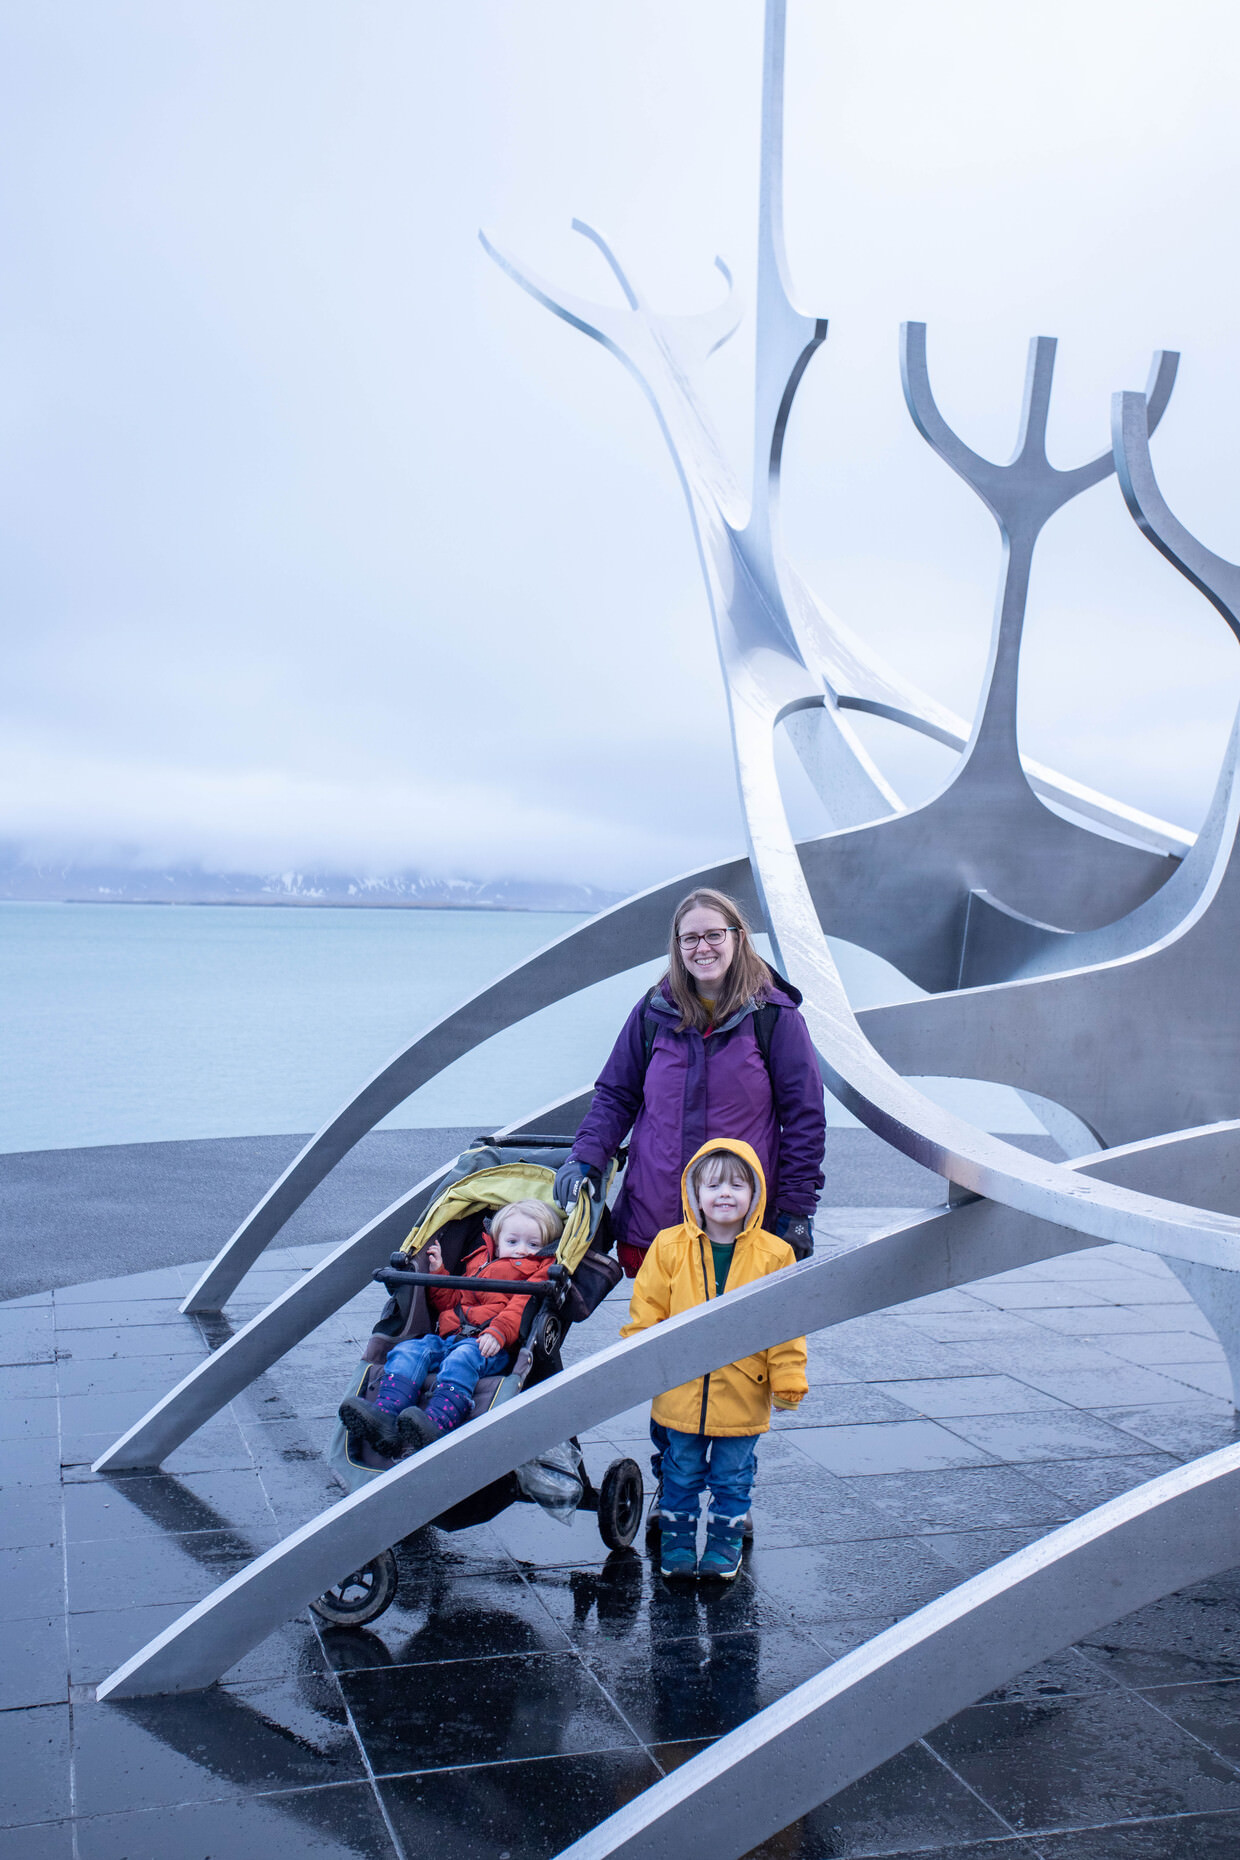 The family with the Sun Voyager statue, by Jón Gunnar Árnason